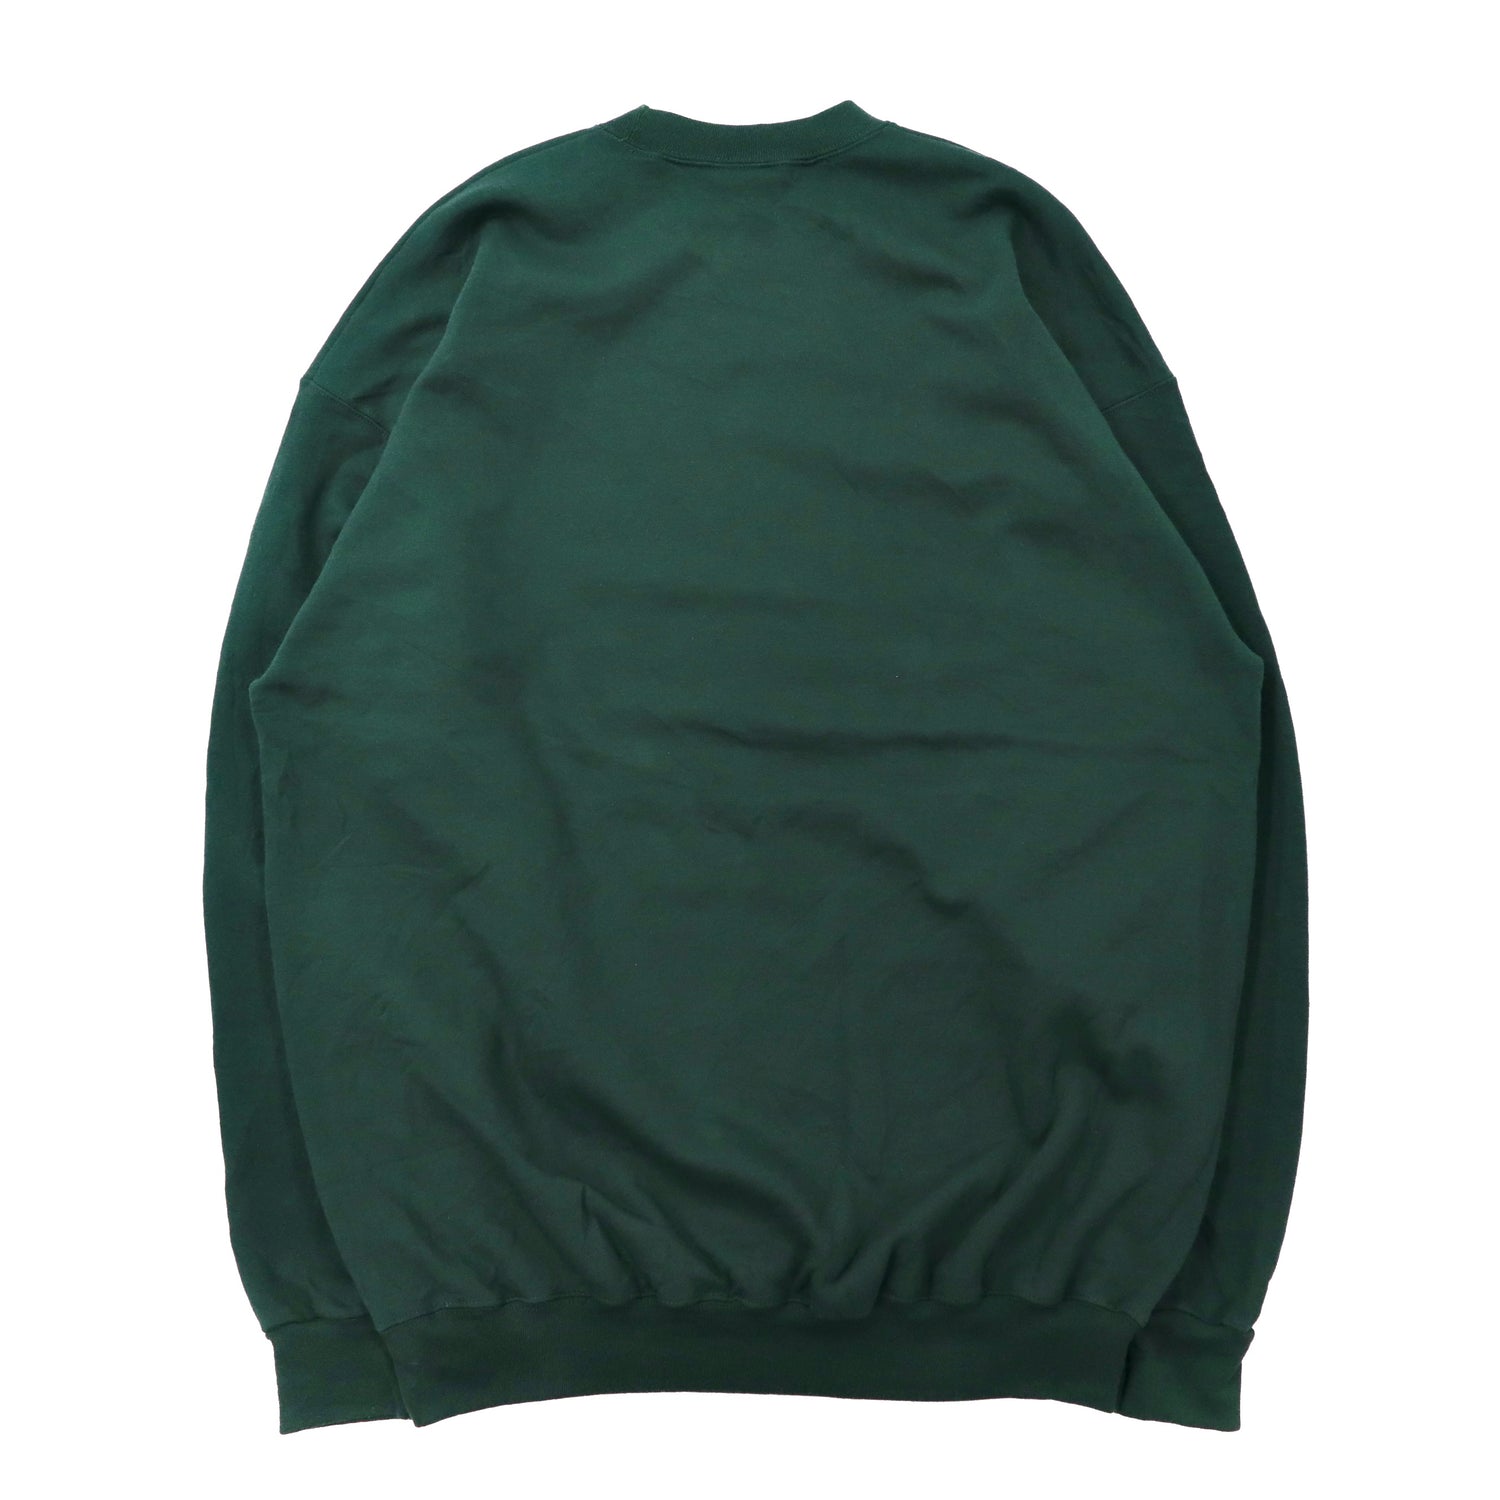 PORT & COMPANY Big Size Print Sweatshirt XL Green Cotton BRUSHED